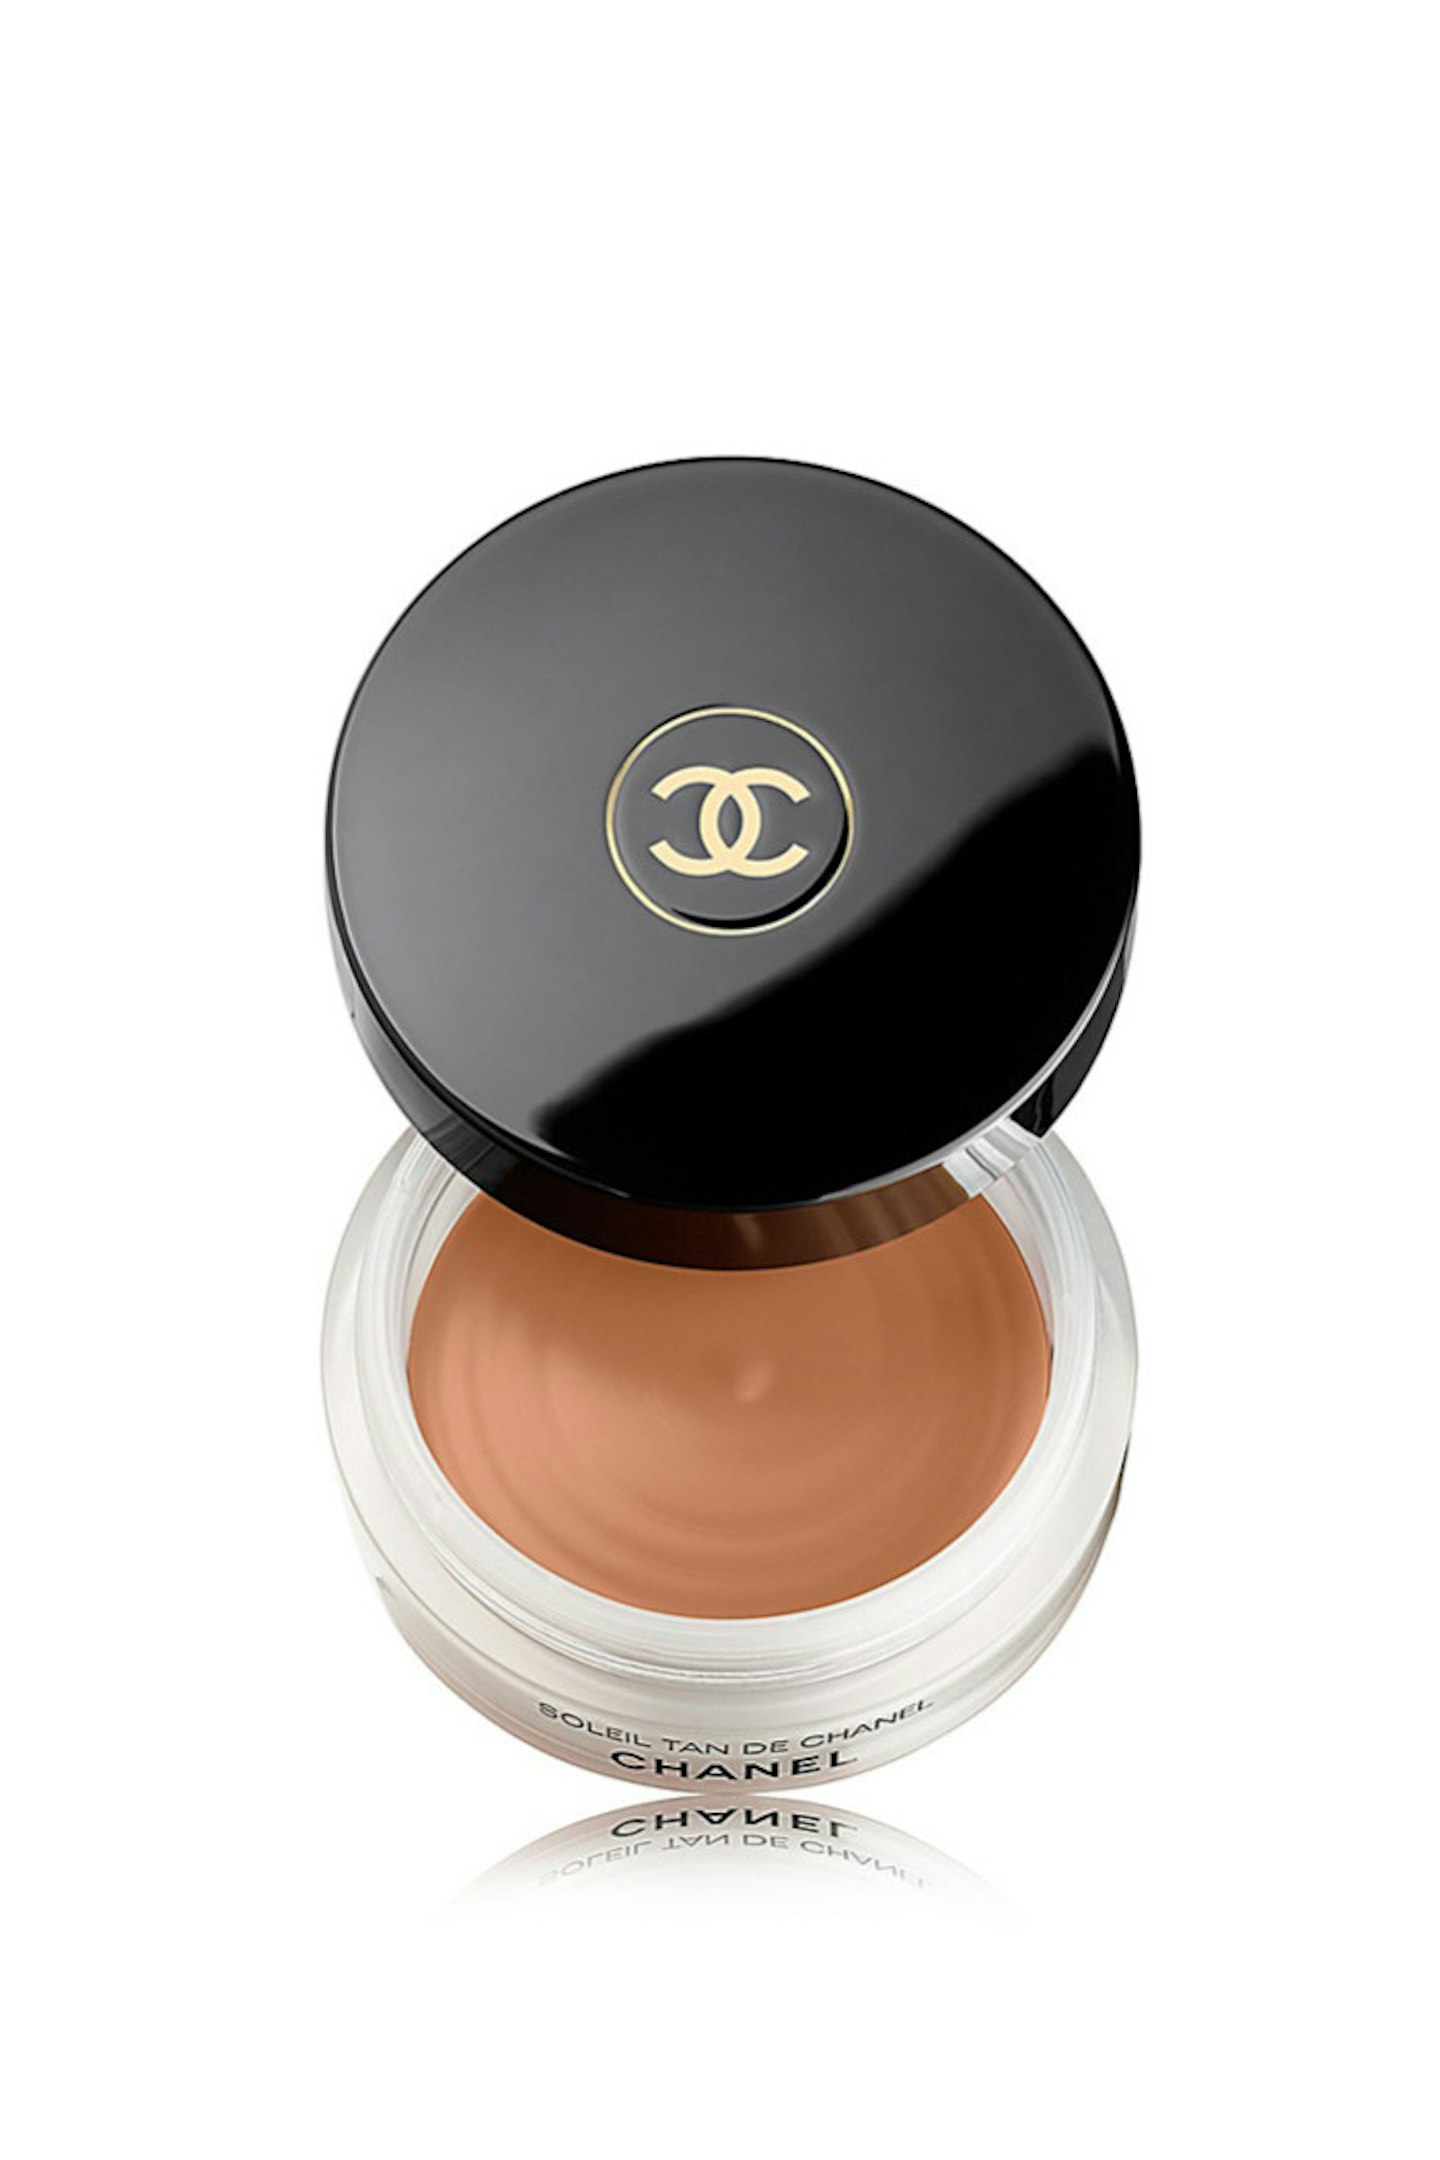 Chanel Soleil Tan de Chanel Bronzing Makeup Base, £32.00